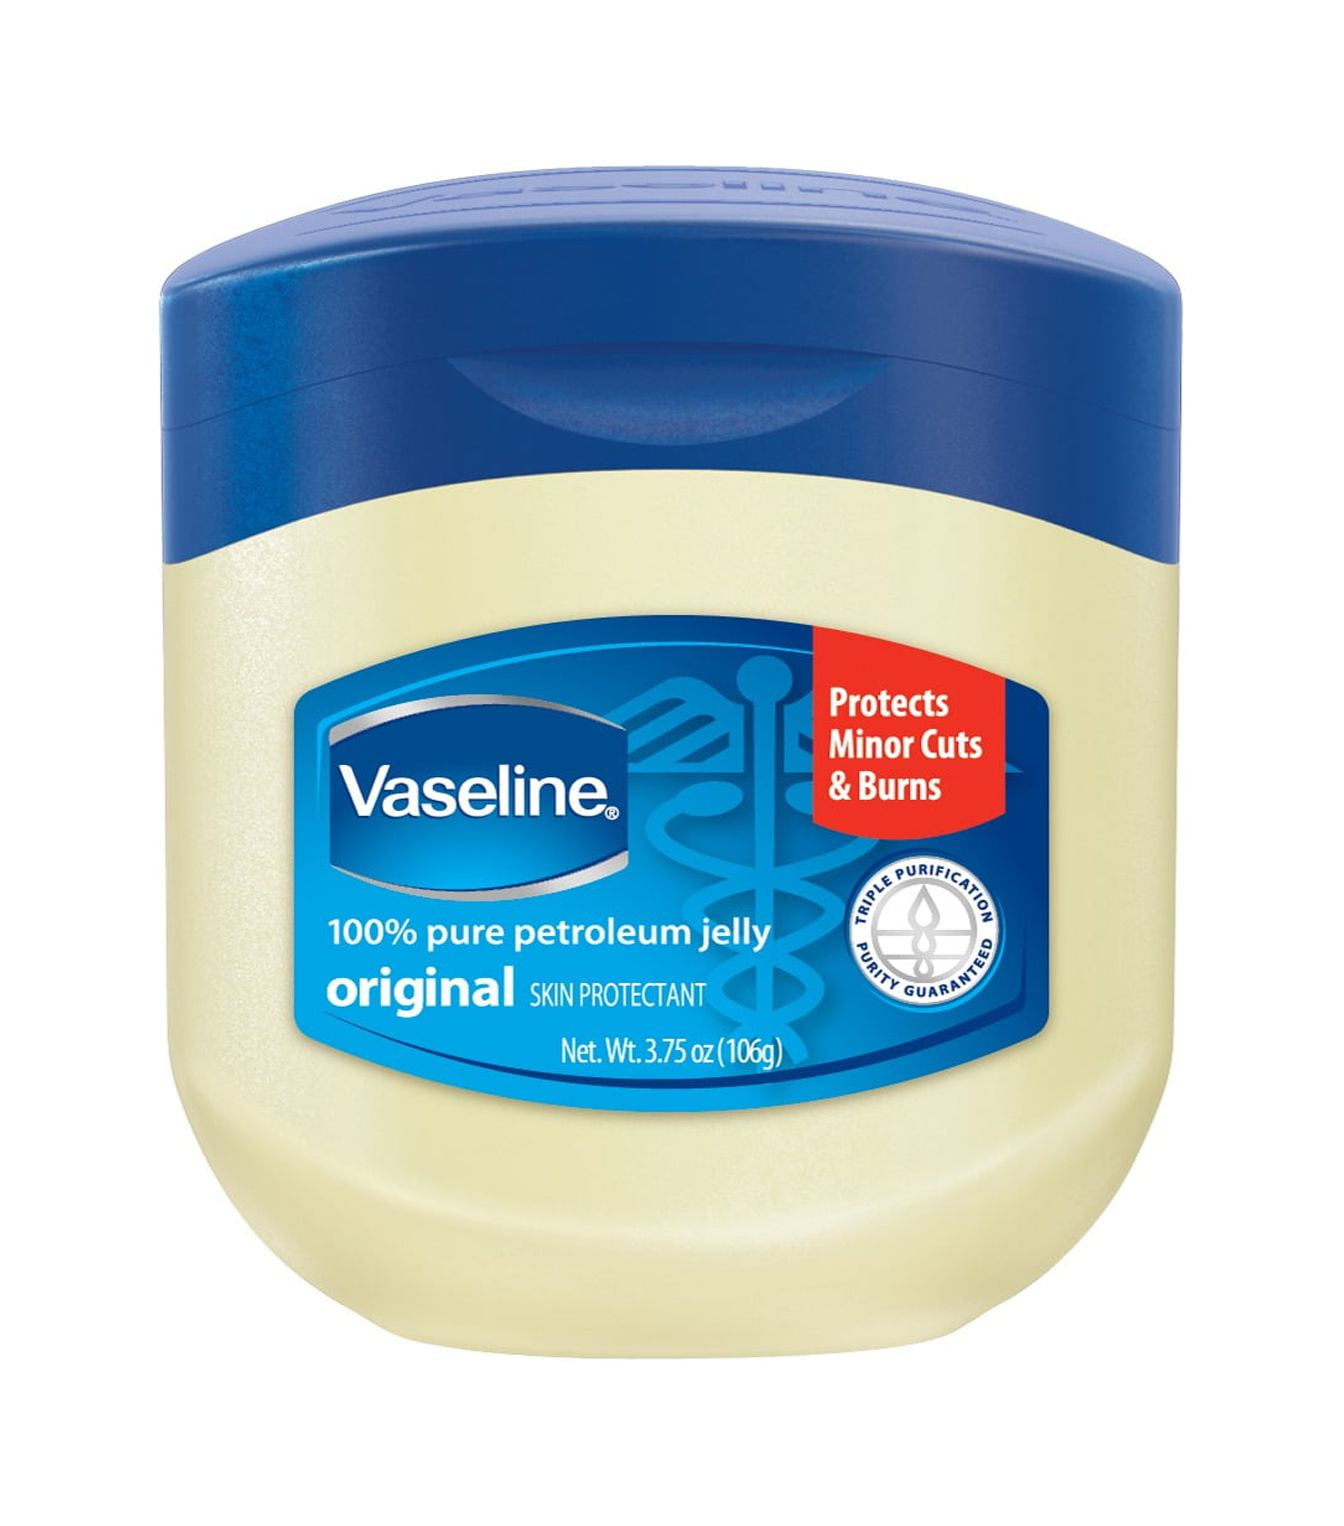 Vaseline 100% Pure Petroleum Jelly Original Skin Protectant, 3.75